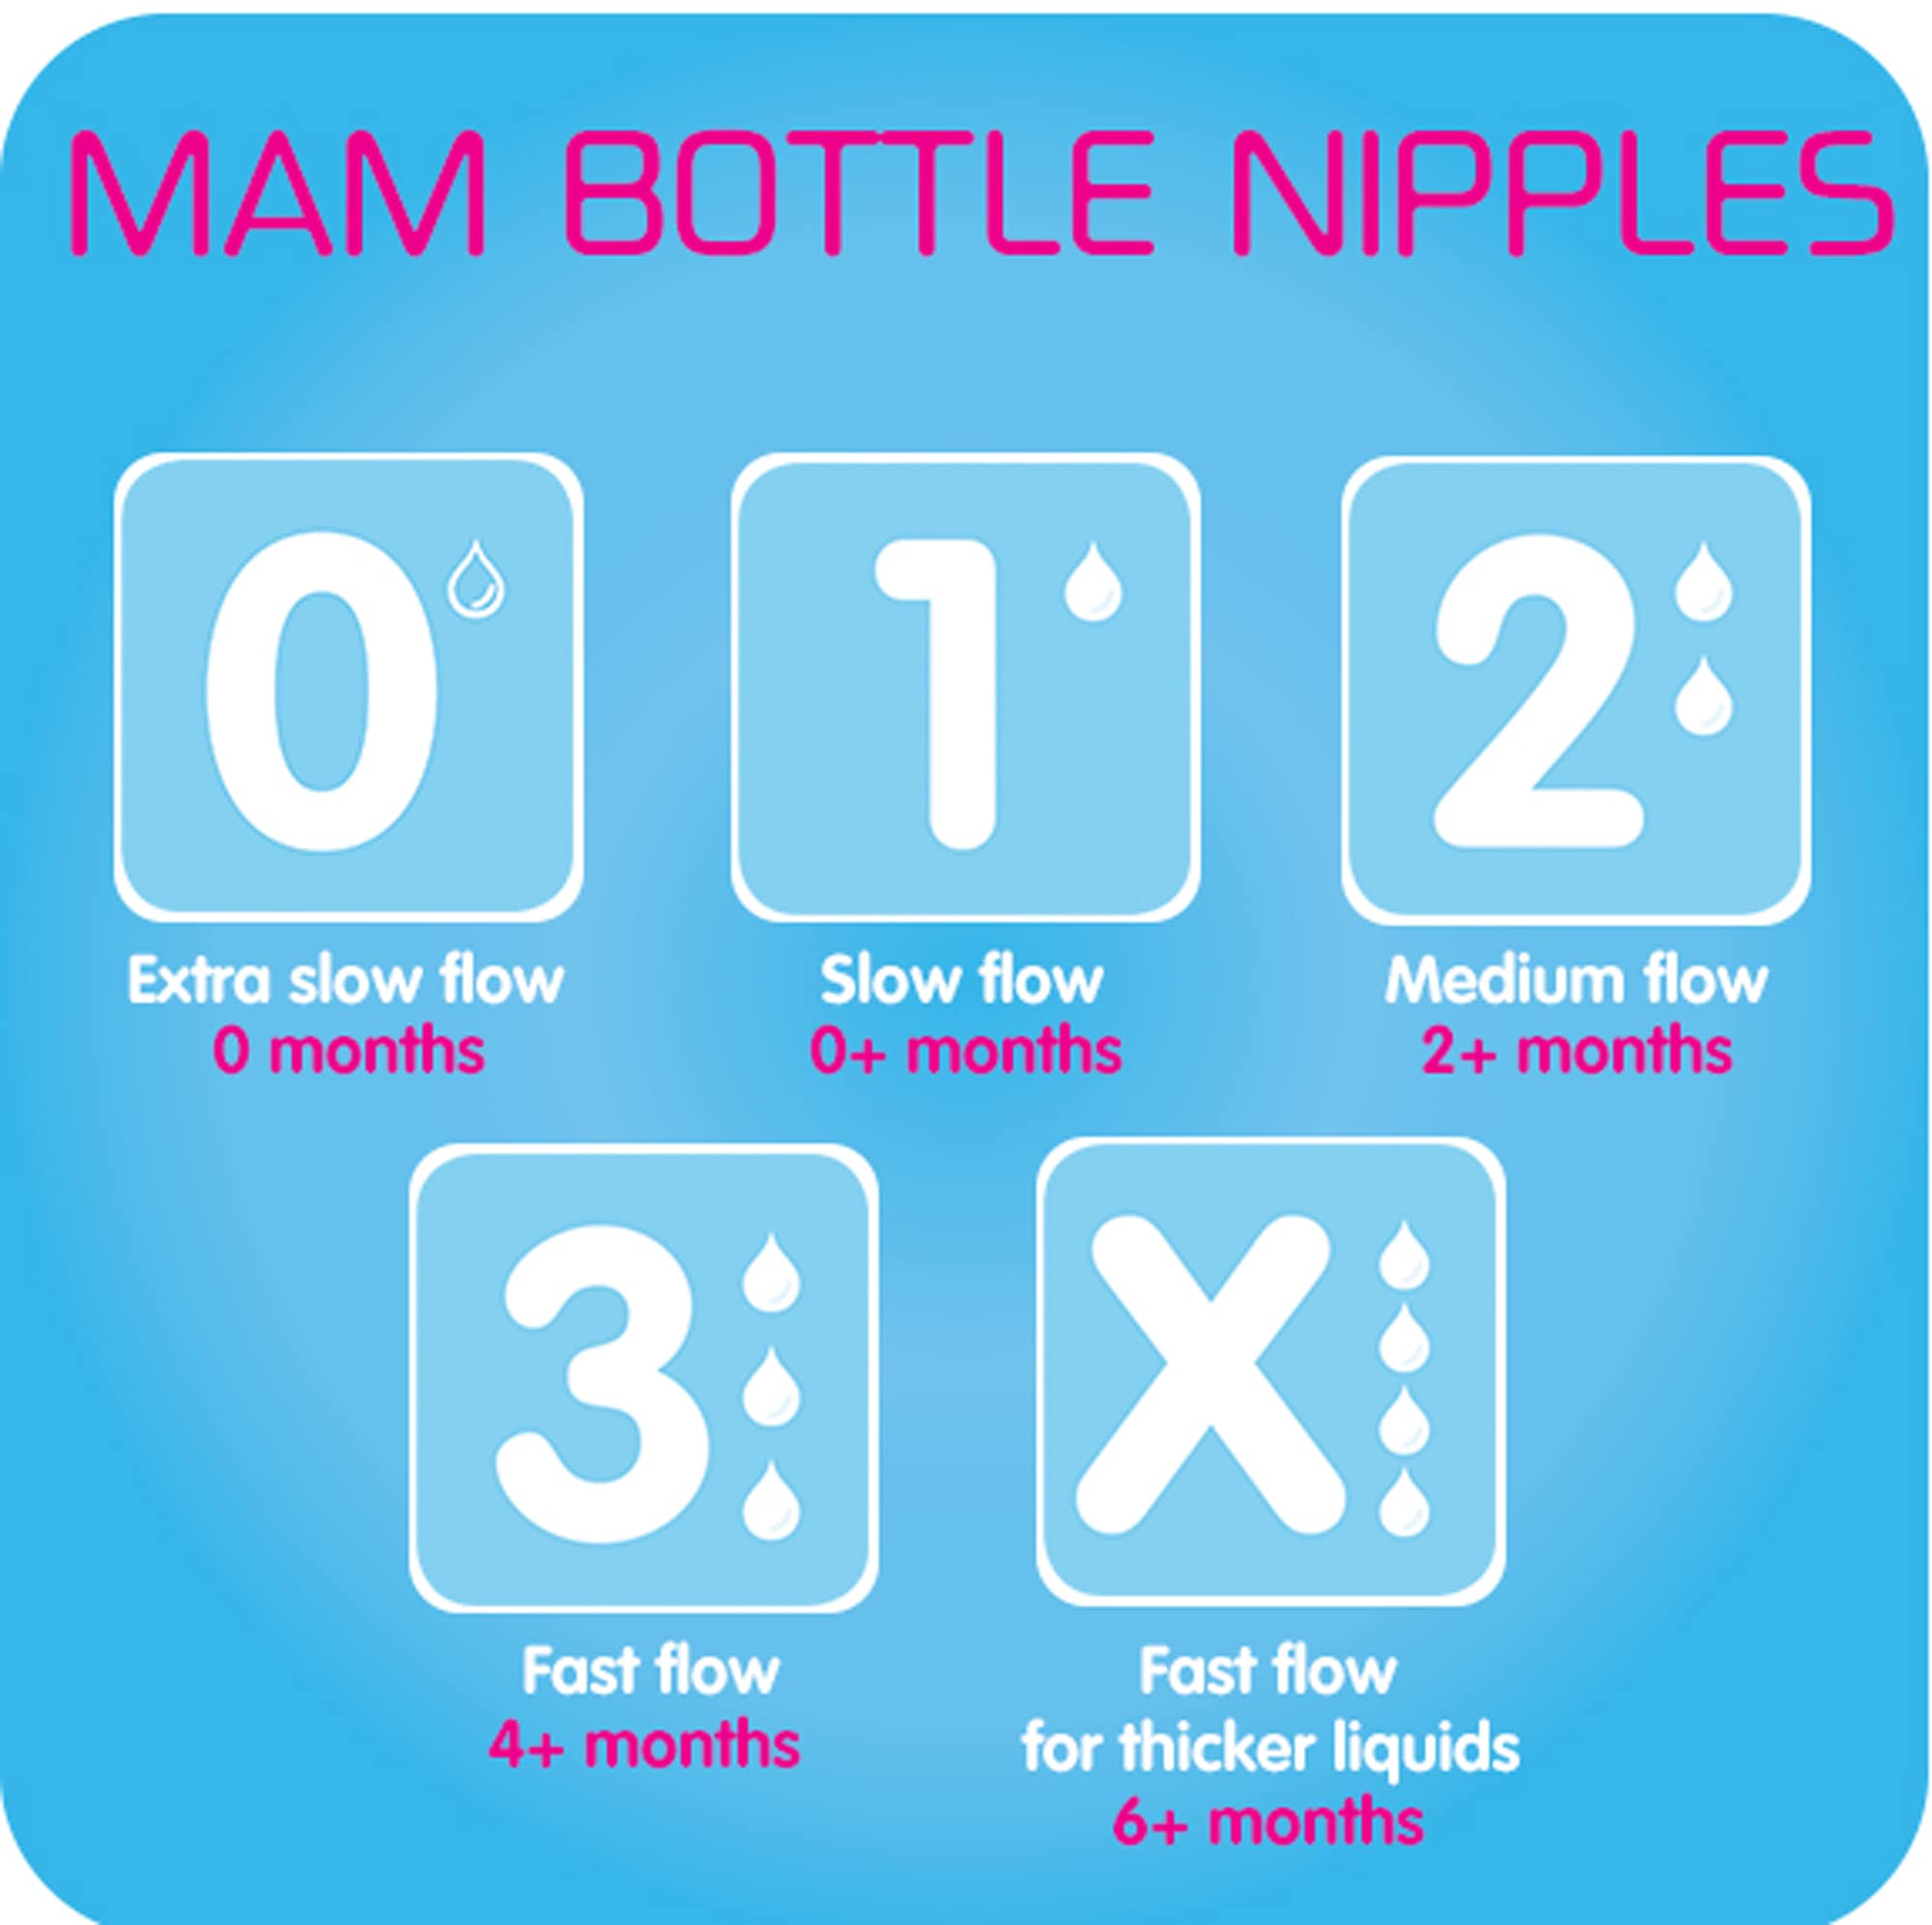 MAM Bottle Nipples Medium Flow Nipple Level 2, for 2+ Months, SkinSoft Silicone Nipples for Baby Bottles, Fits All MAM Bottles, 4 Pack